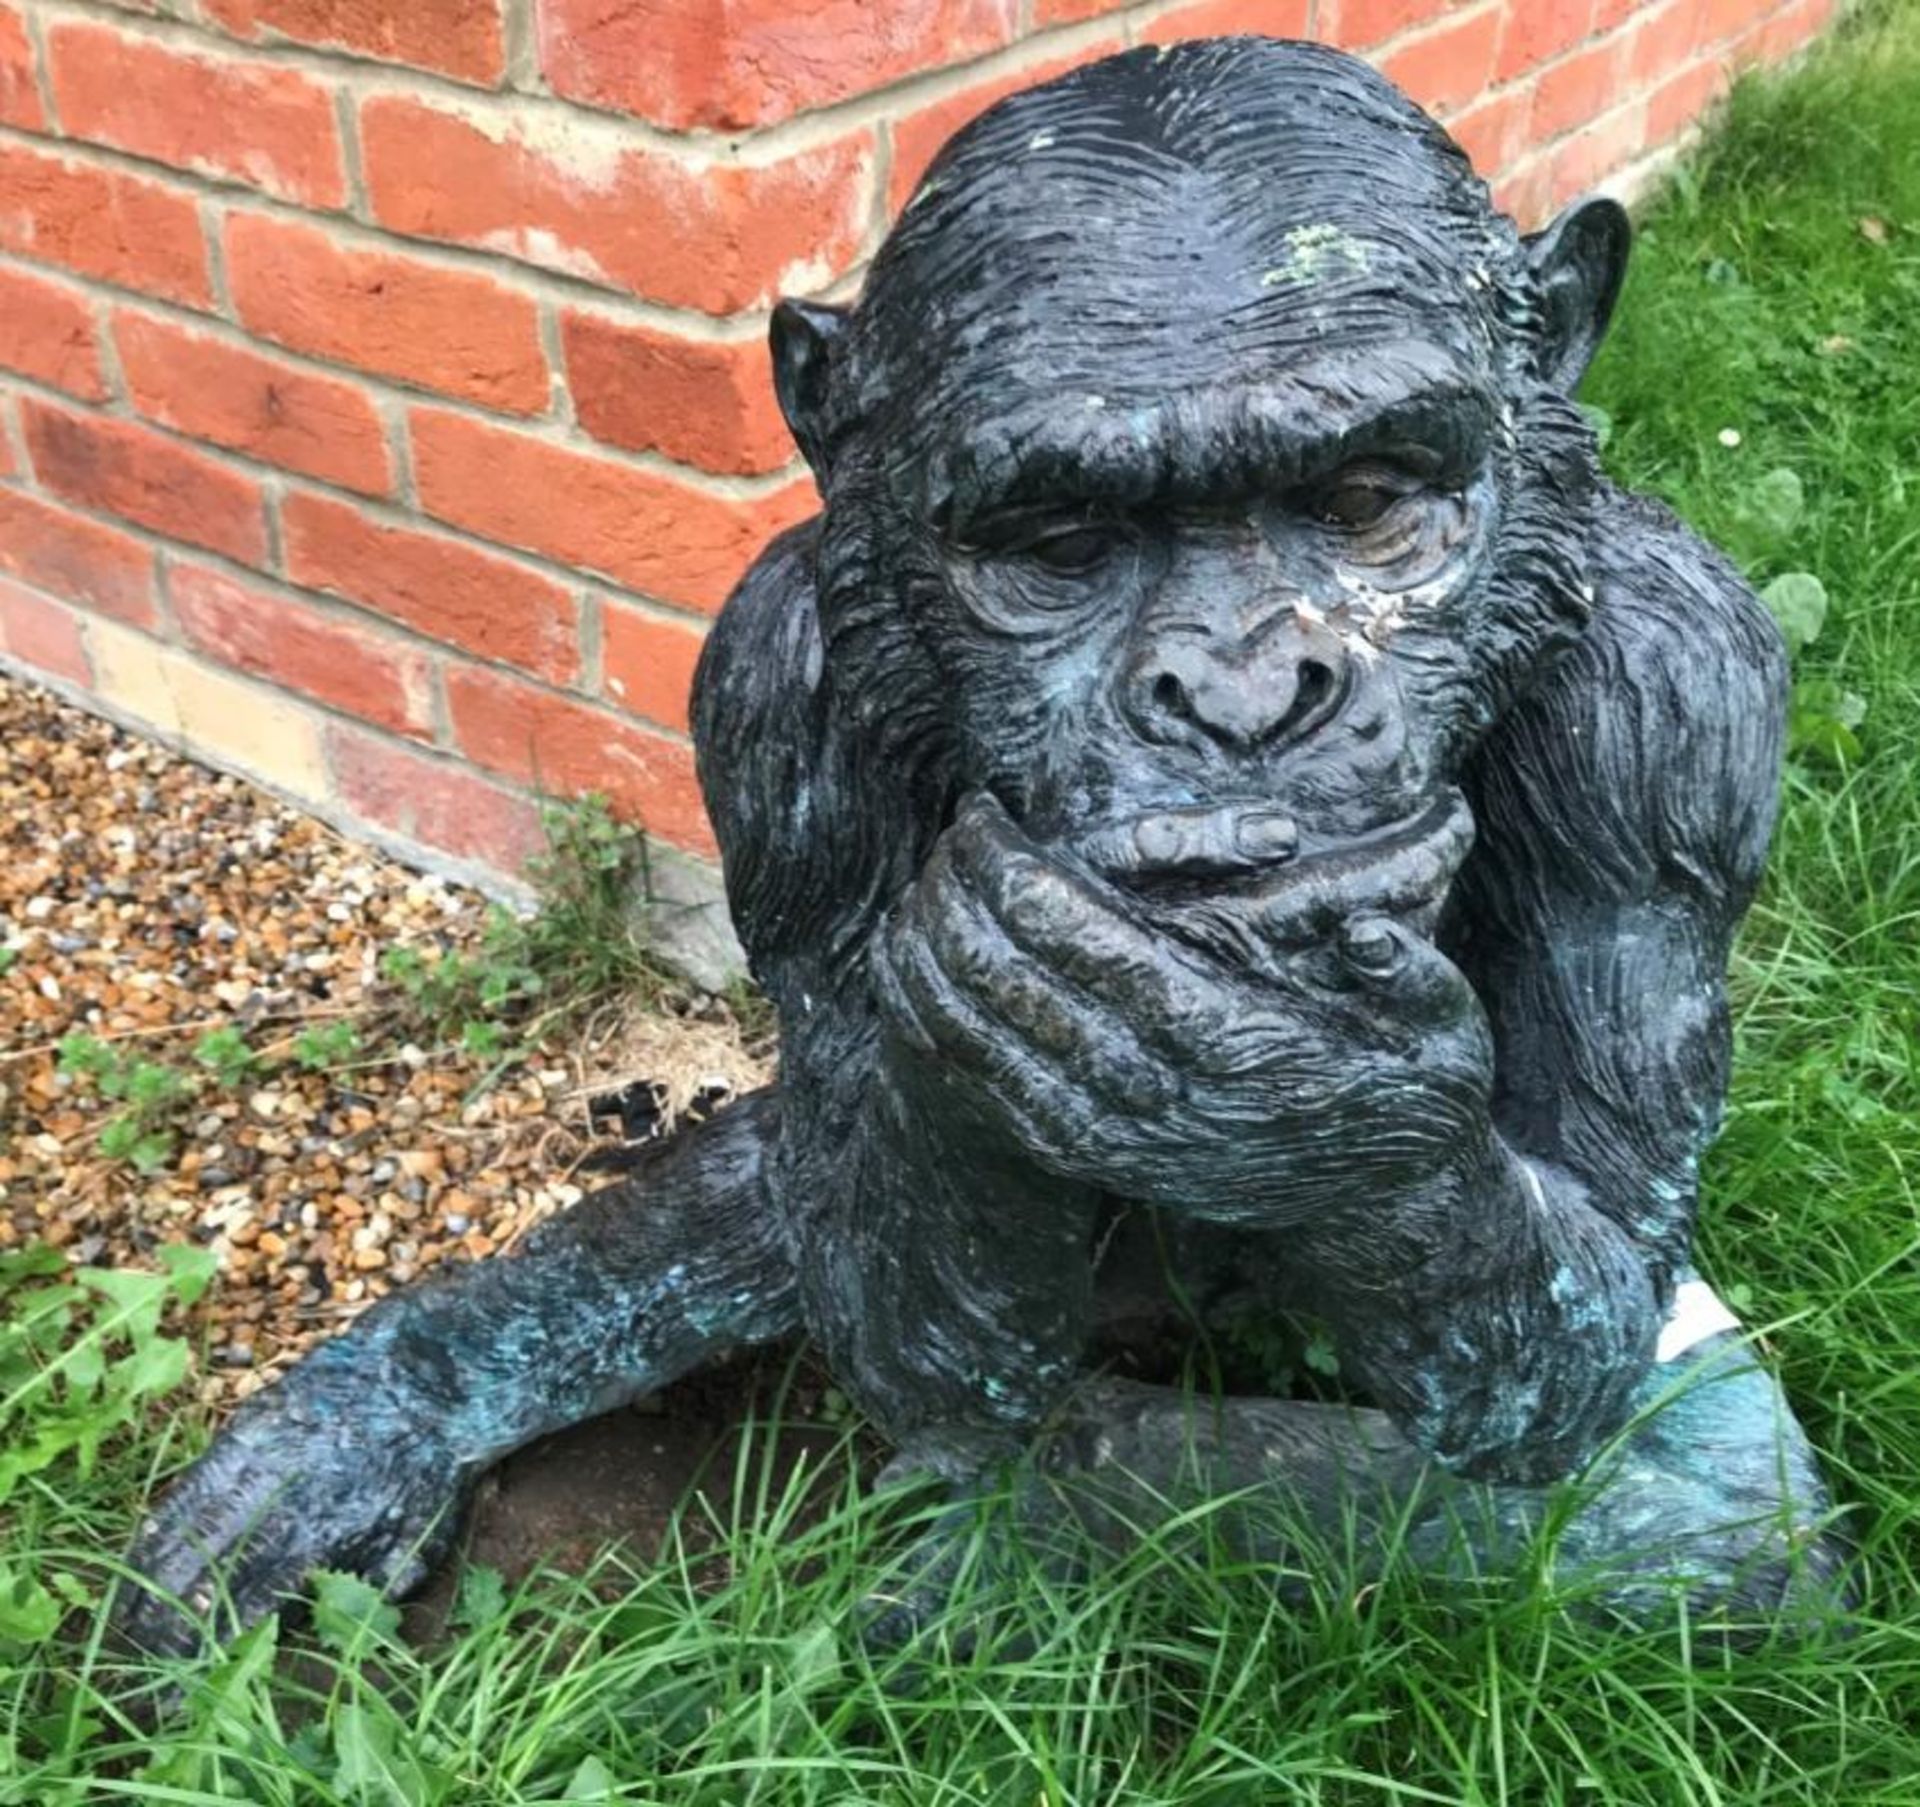 1 x Lifesize Bronze Chimpanze Monkey Garden Statue, Covering It's Mouth In True 'Speak No Evil' - Image 2 of 4